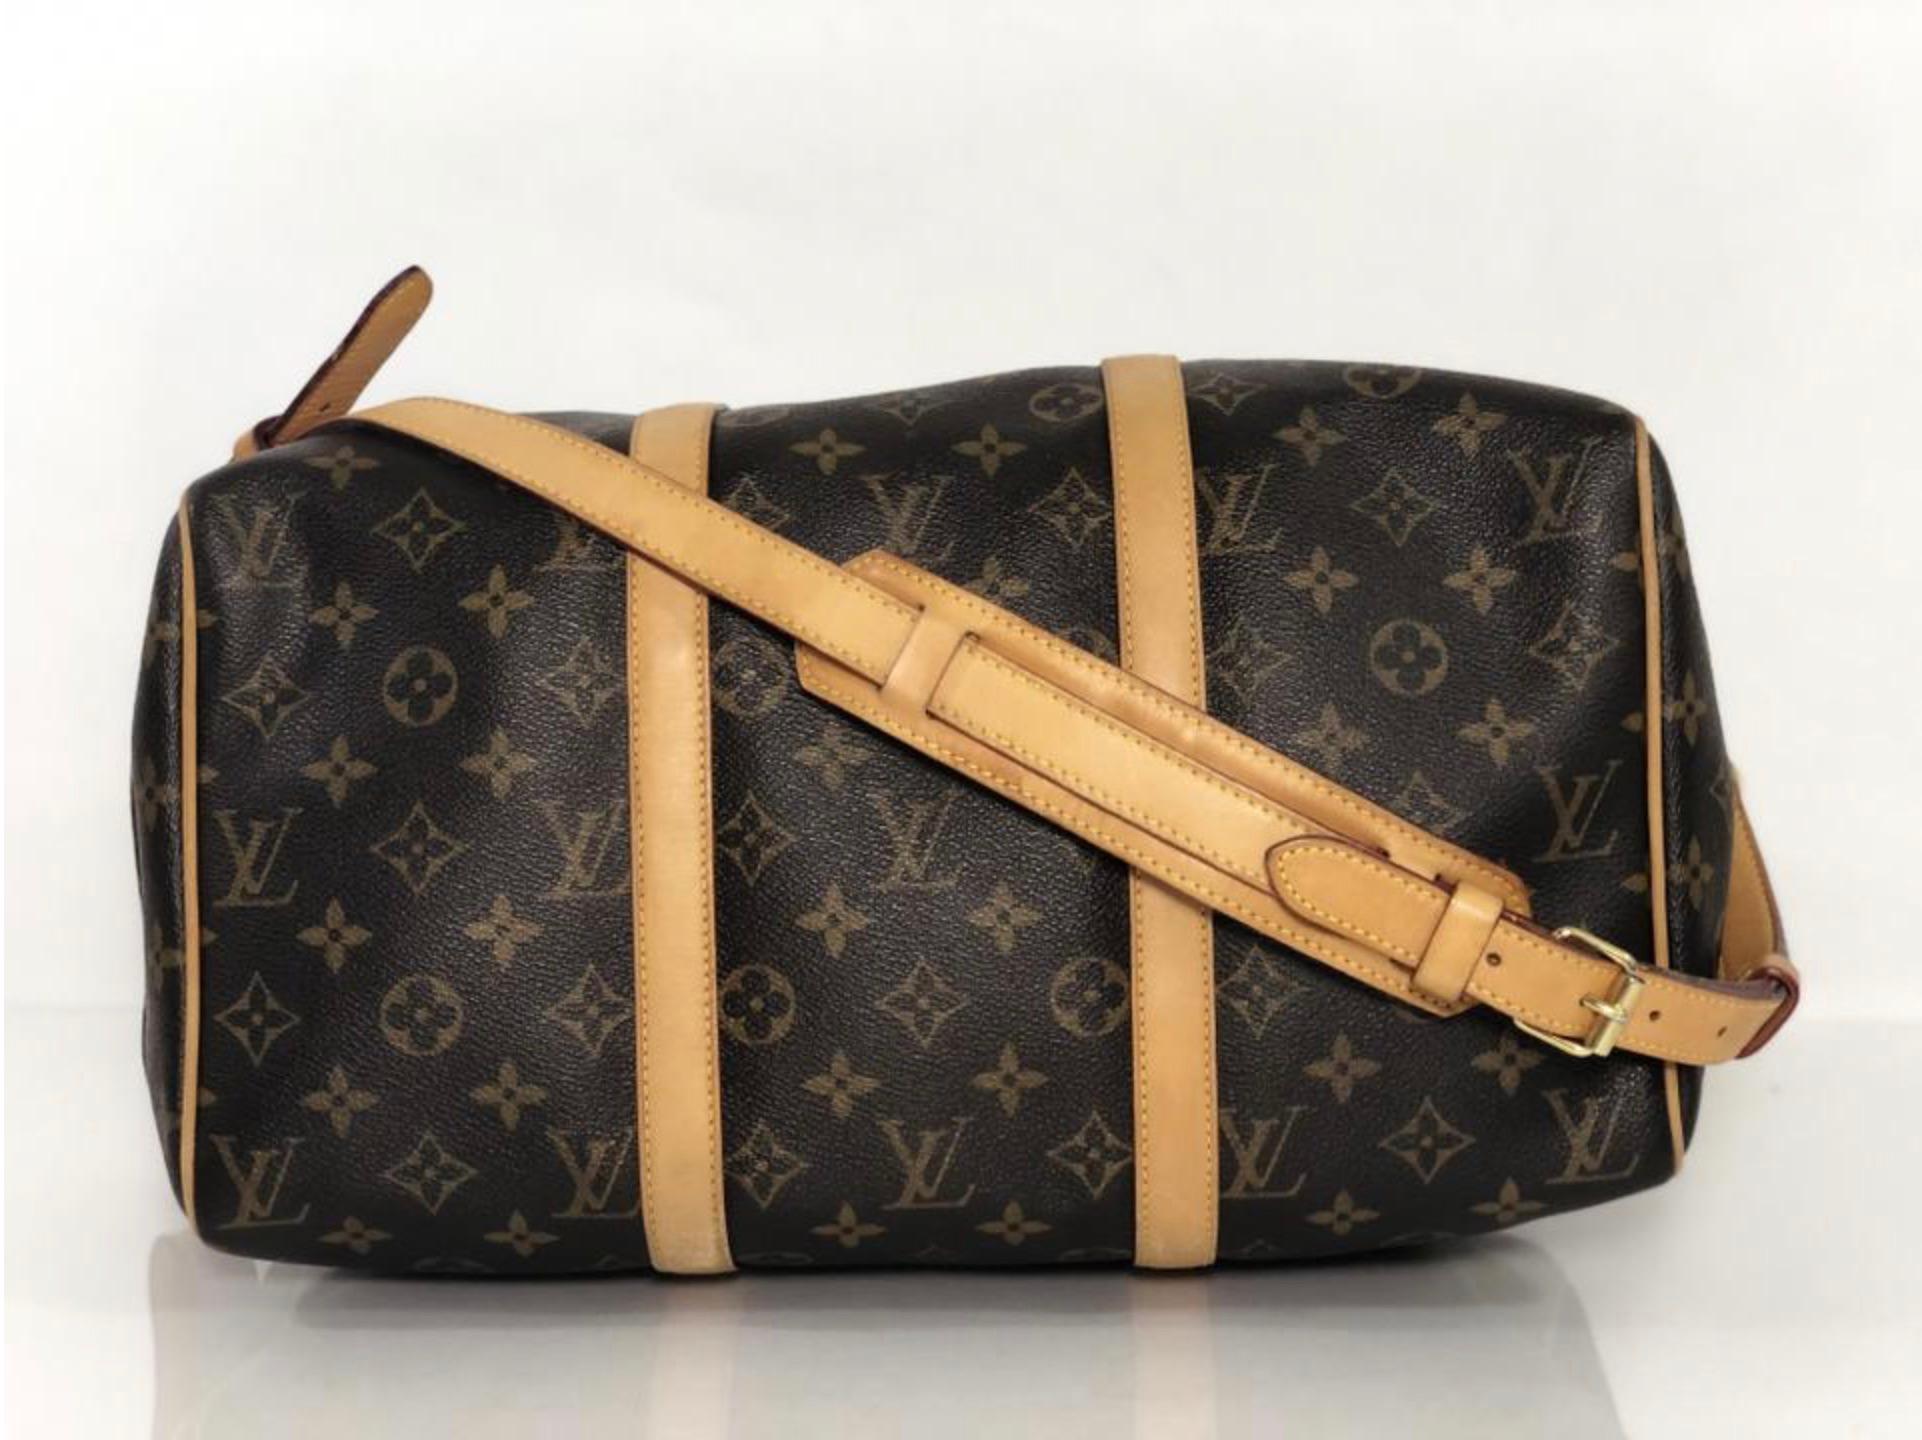  Louis Vuitton Monogram Sofia Coppola SC MM Shoulder Travel Handbag In Good Condition For Sale In Saint Charles, IL